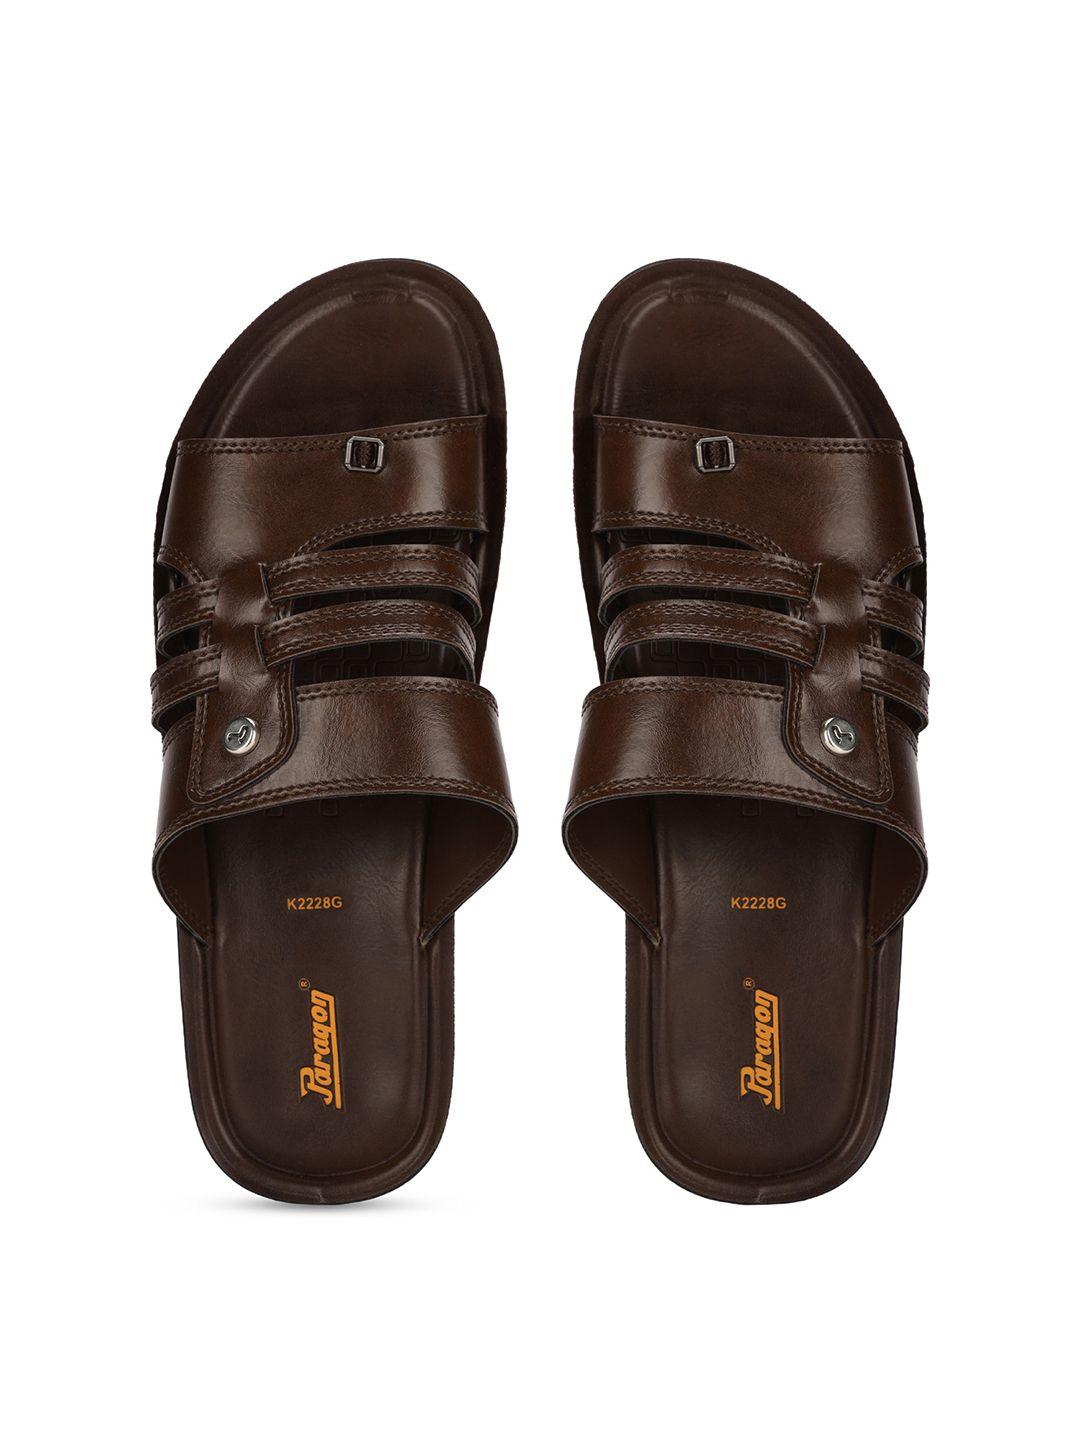 paragon-men-anti-skid-sole-&-sturdy-construction-comfort-sandals